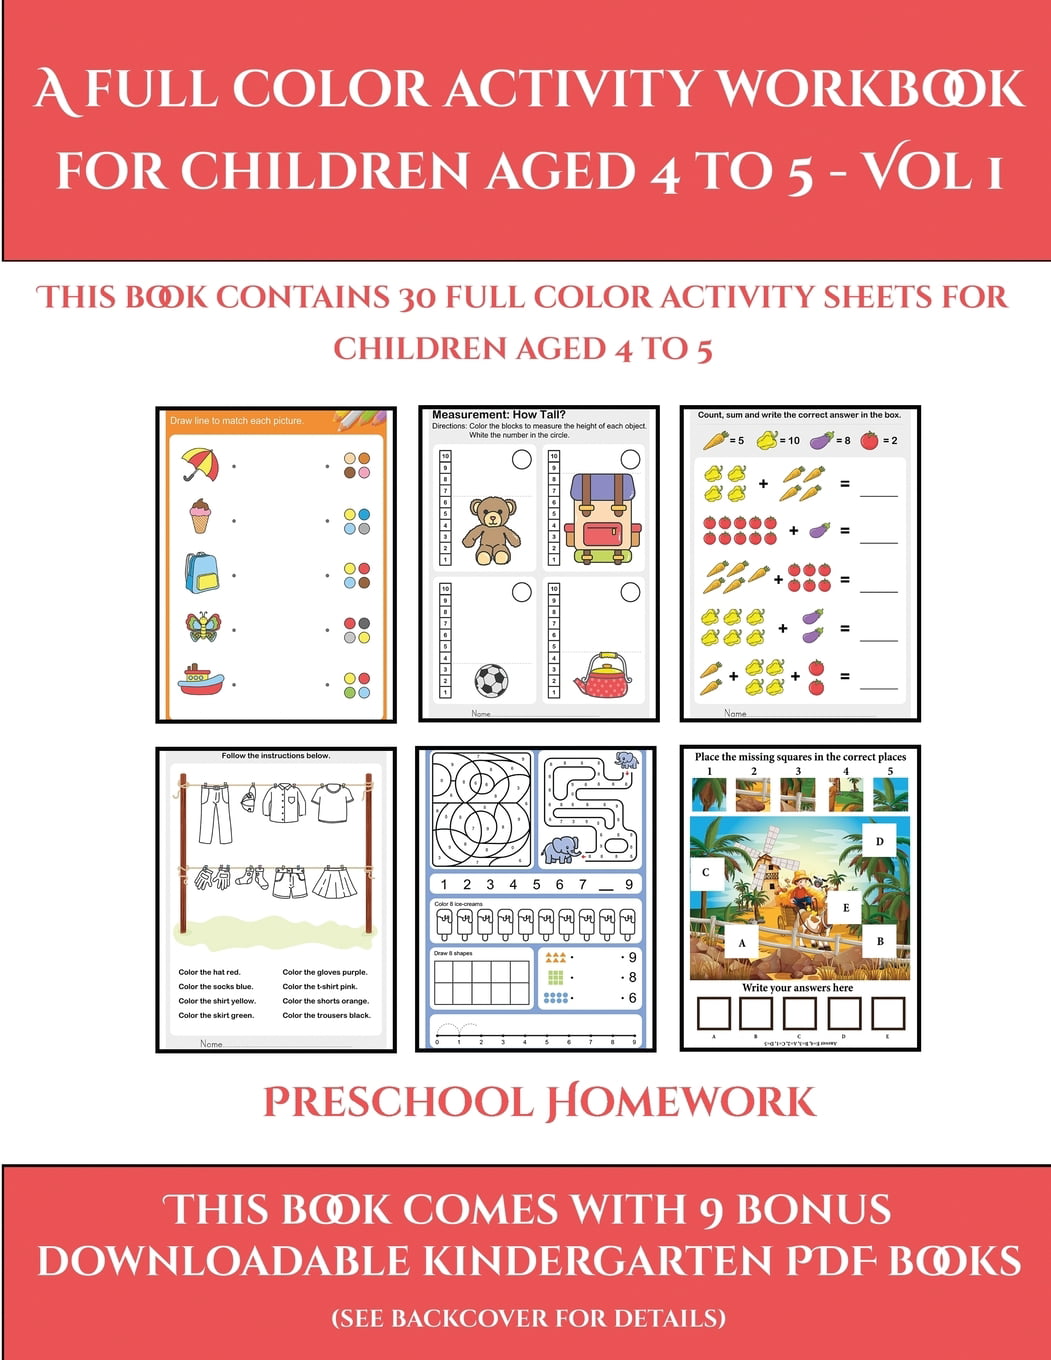 Preschool Homework Preschool Homework (A full color